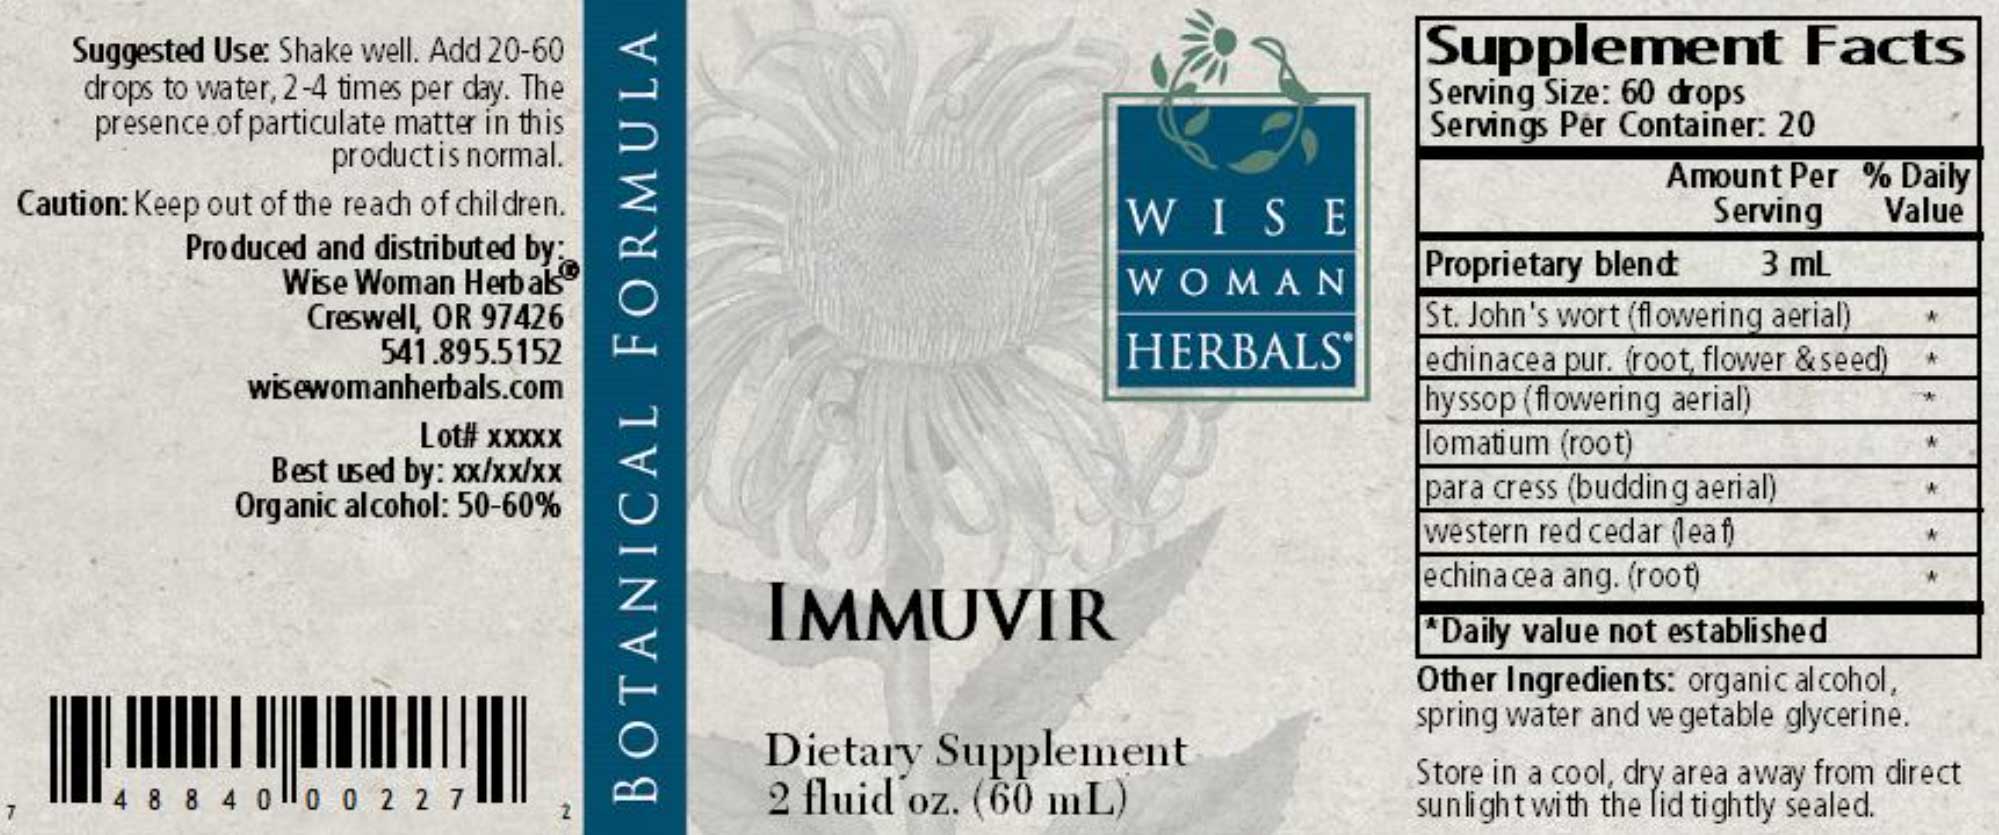 Wise Woman Herbals Immuvir Label